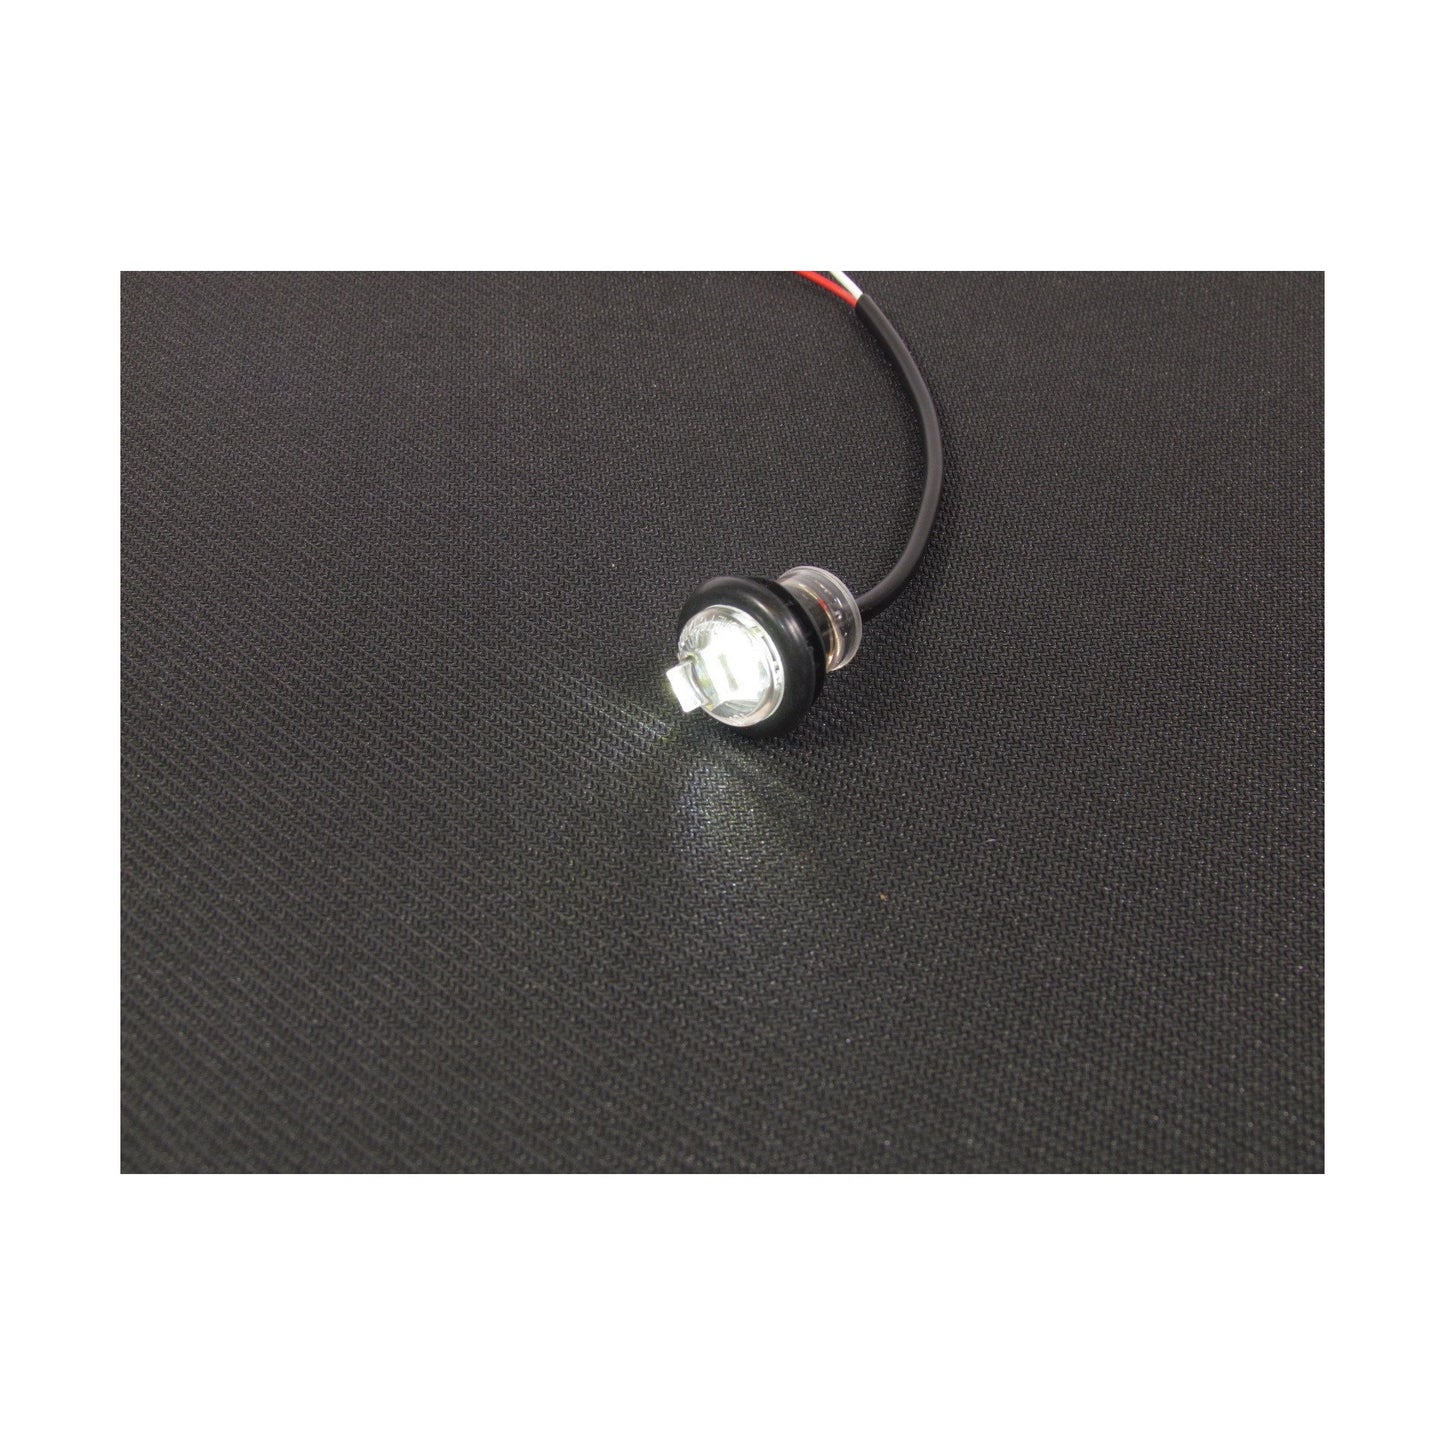 Fortpro 3/4" Round Clearance/Marker Led Light with 1 LEDs